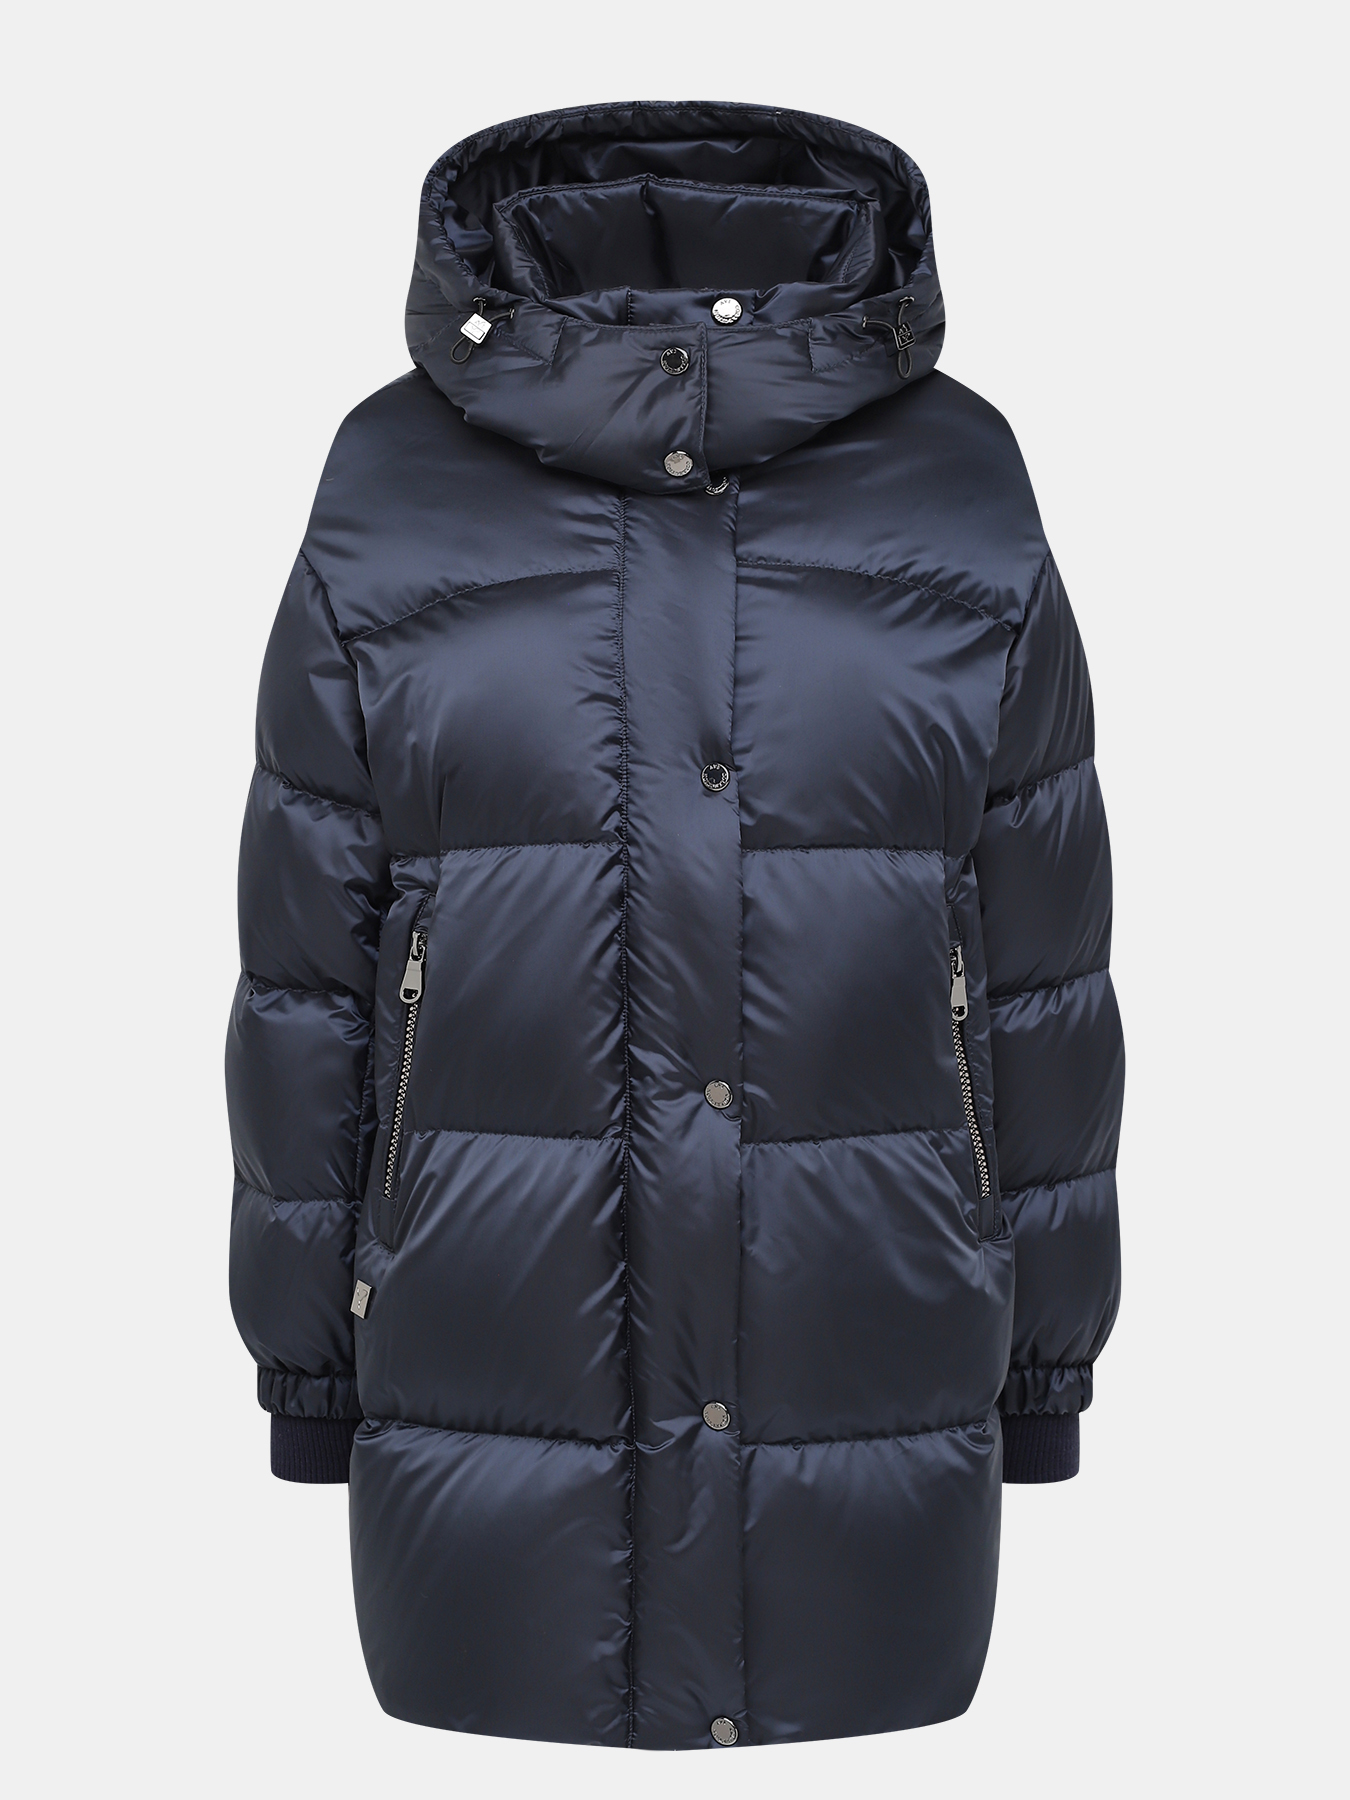 Пальто зимнее AVI 433512-024, цвет темно-синий, размер 52